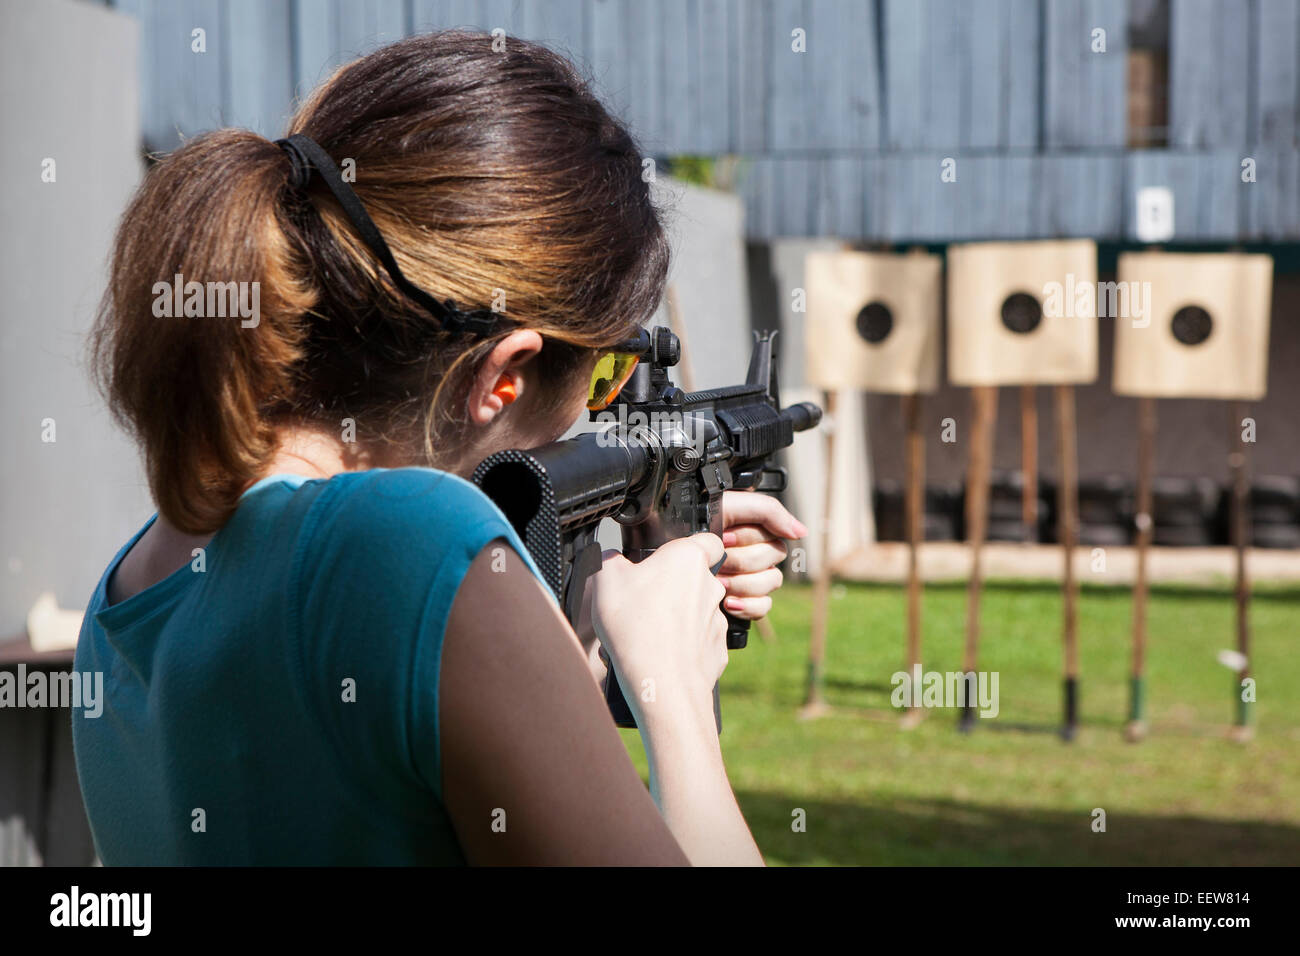 A woman shooting on a range Stock Photo